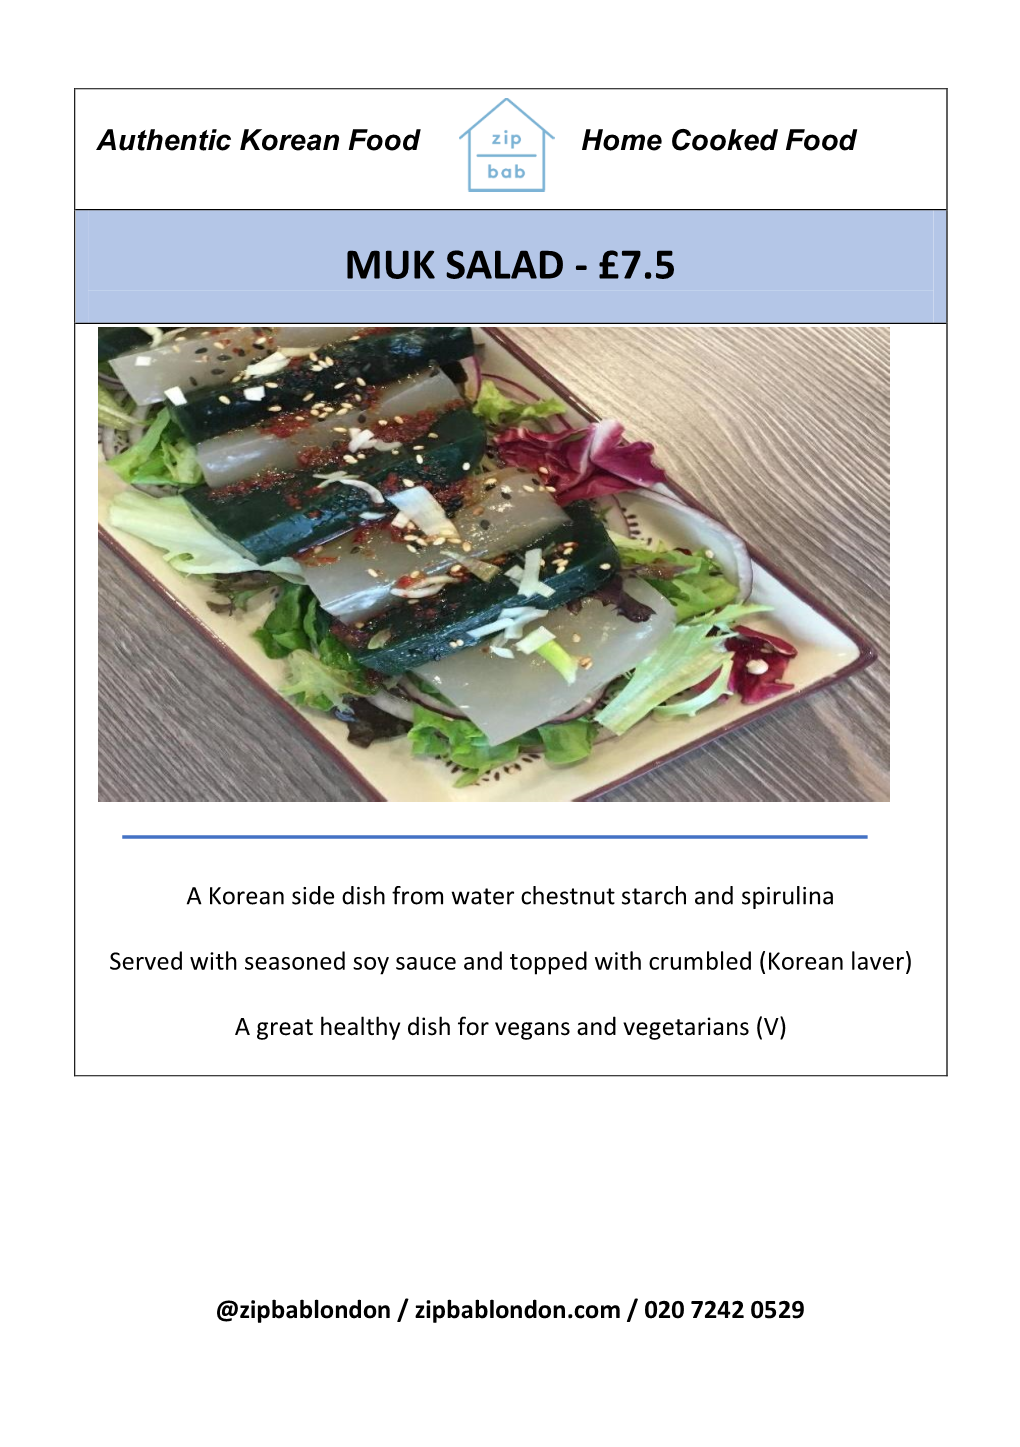 Muk Salad - £7.5